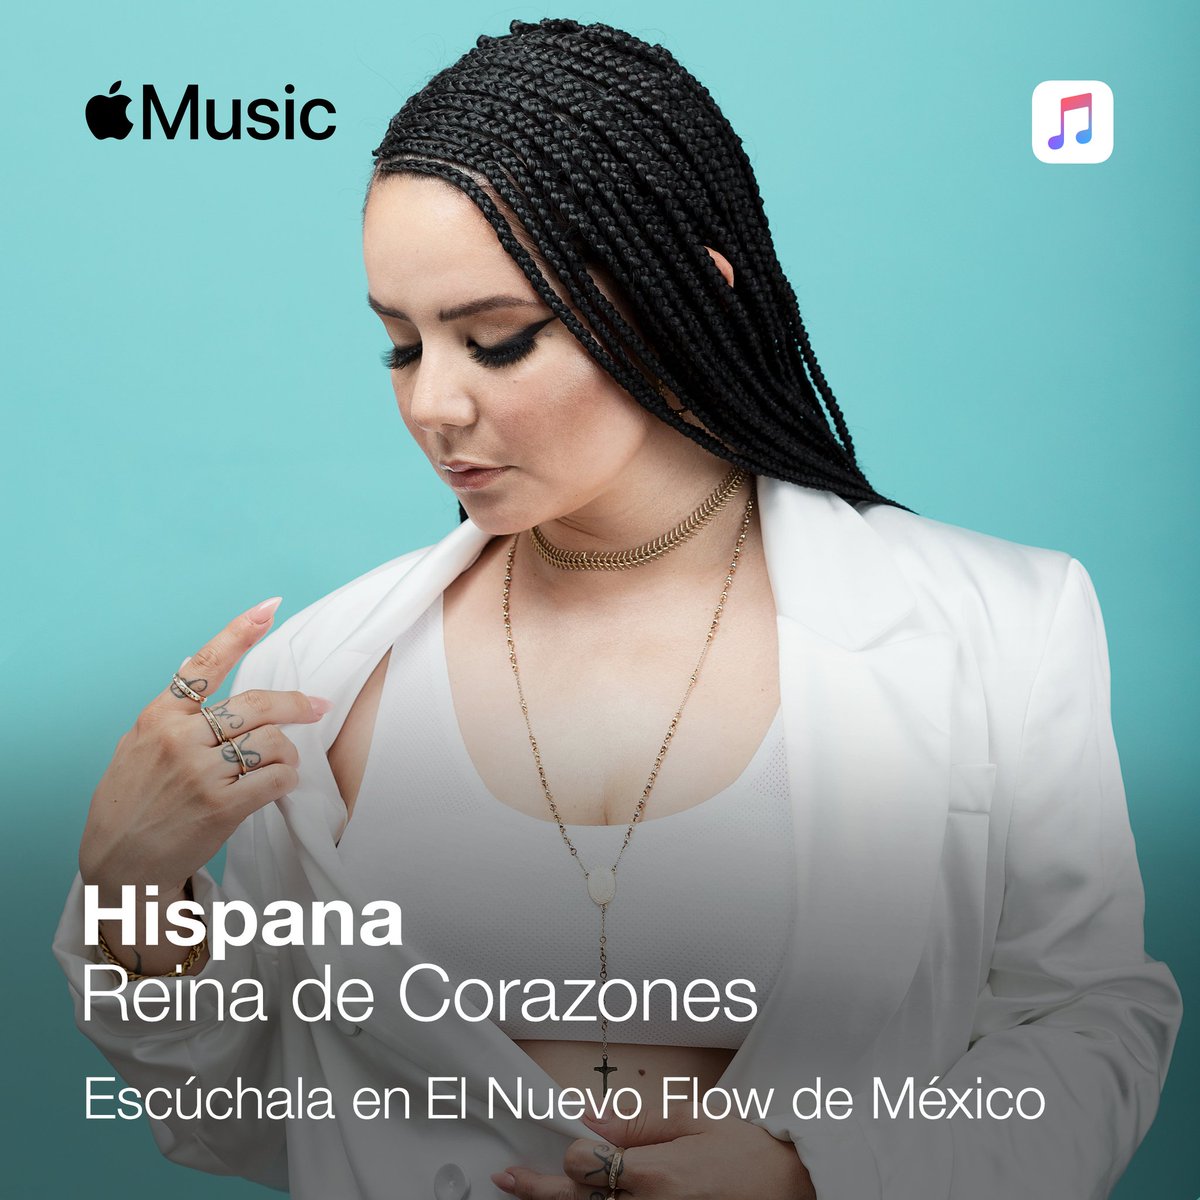 ¡Escucha 'Reina de Corazones' en #ELNUEVOFLOWDEMEXICO de AppleMusic! 
@AppleMusicES 🏌️‍♀️🔥
#REINADECORAZONES #HISPANA